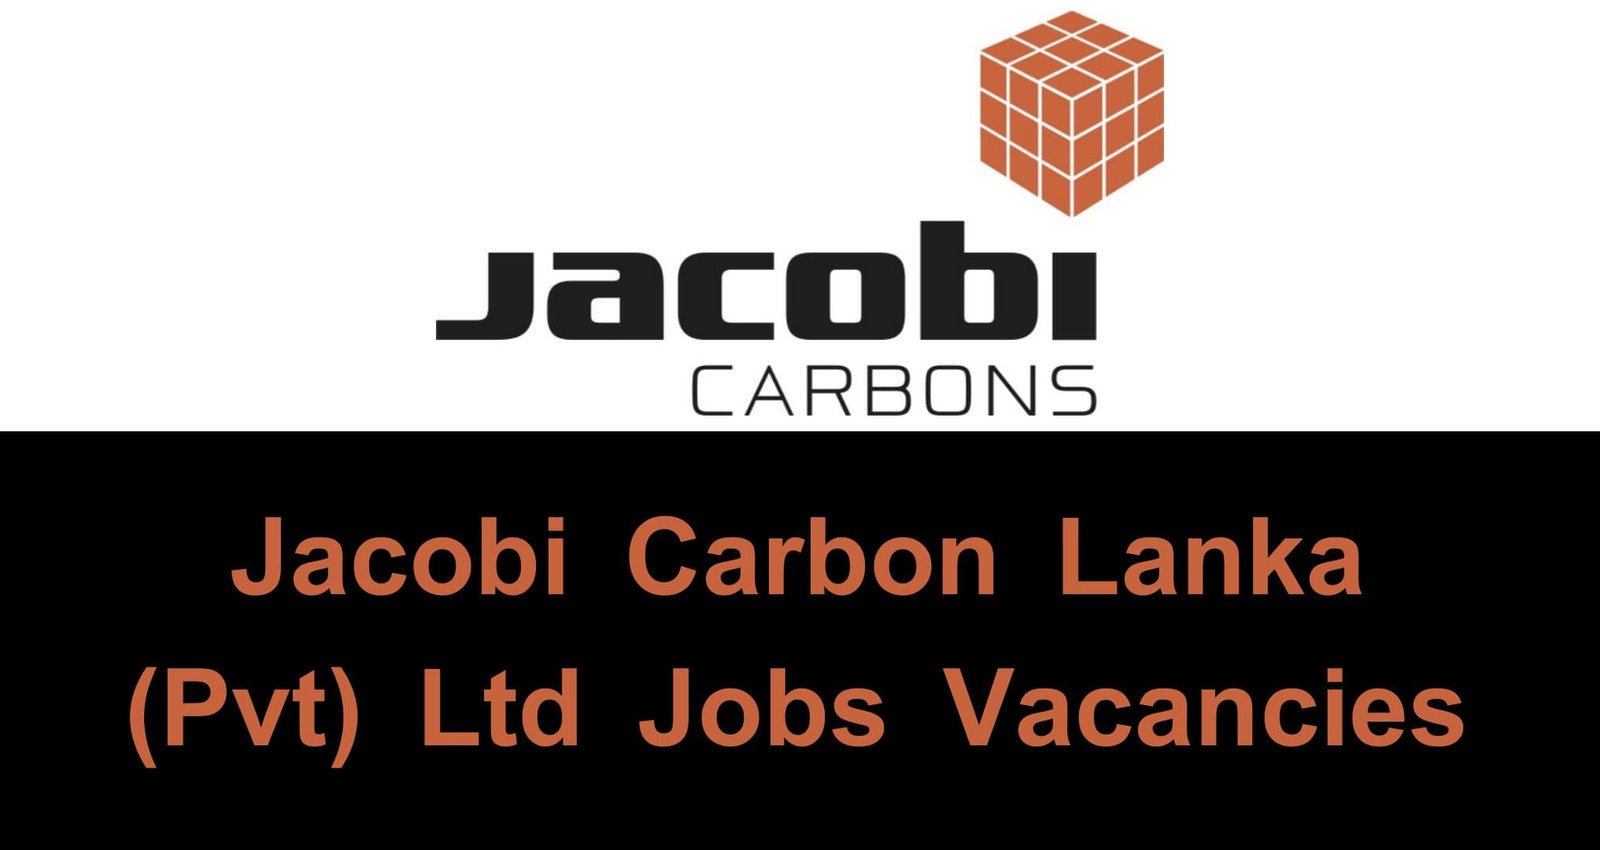 Jacobi Carbon Lanka (Pvt) Ltd Jobs Vacancies